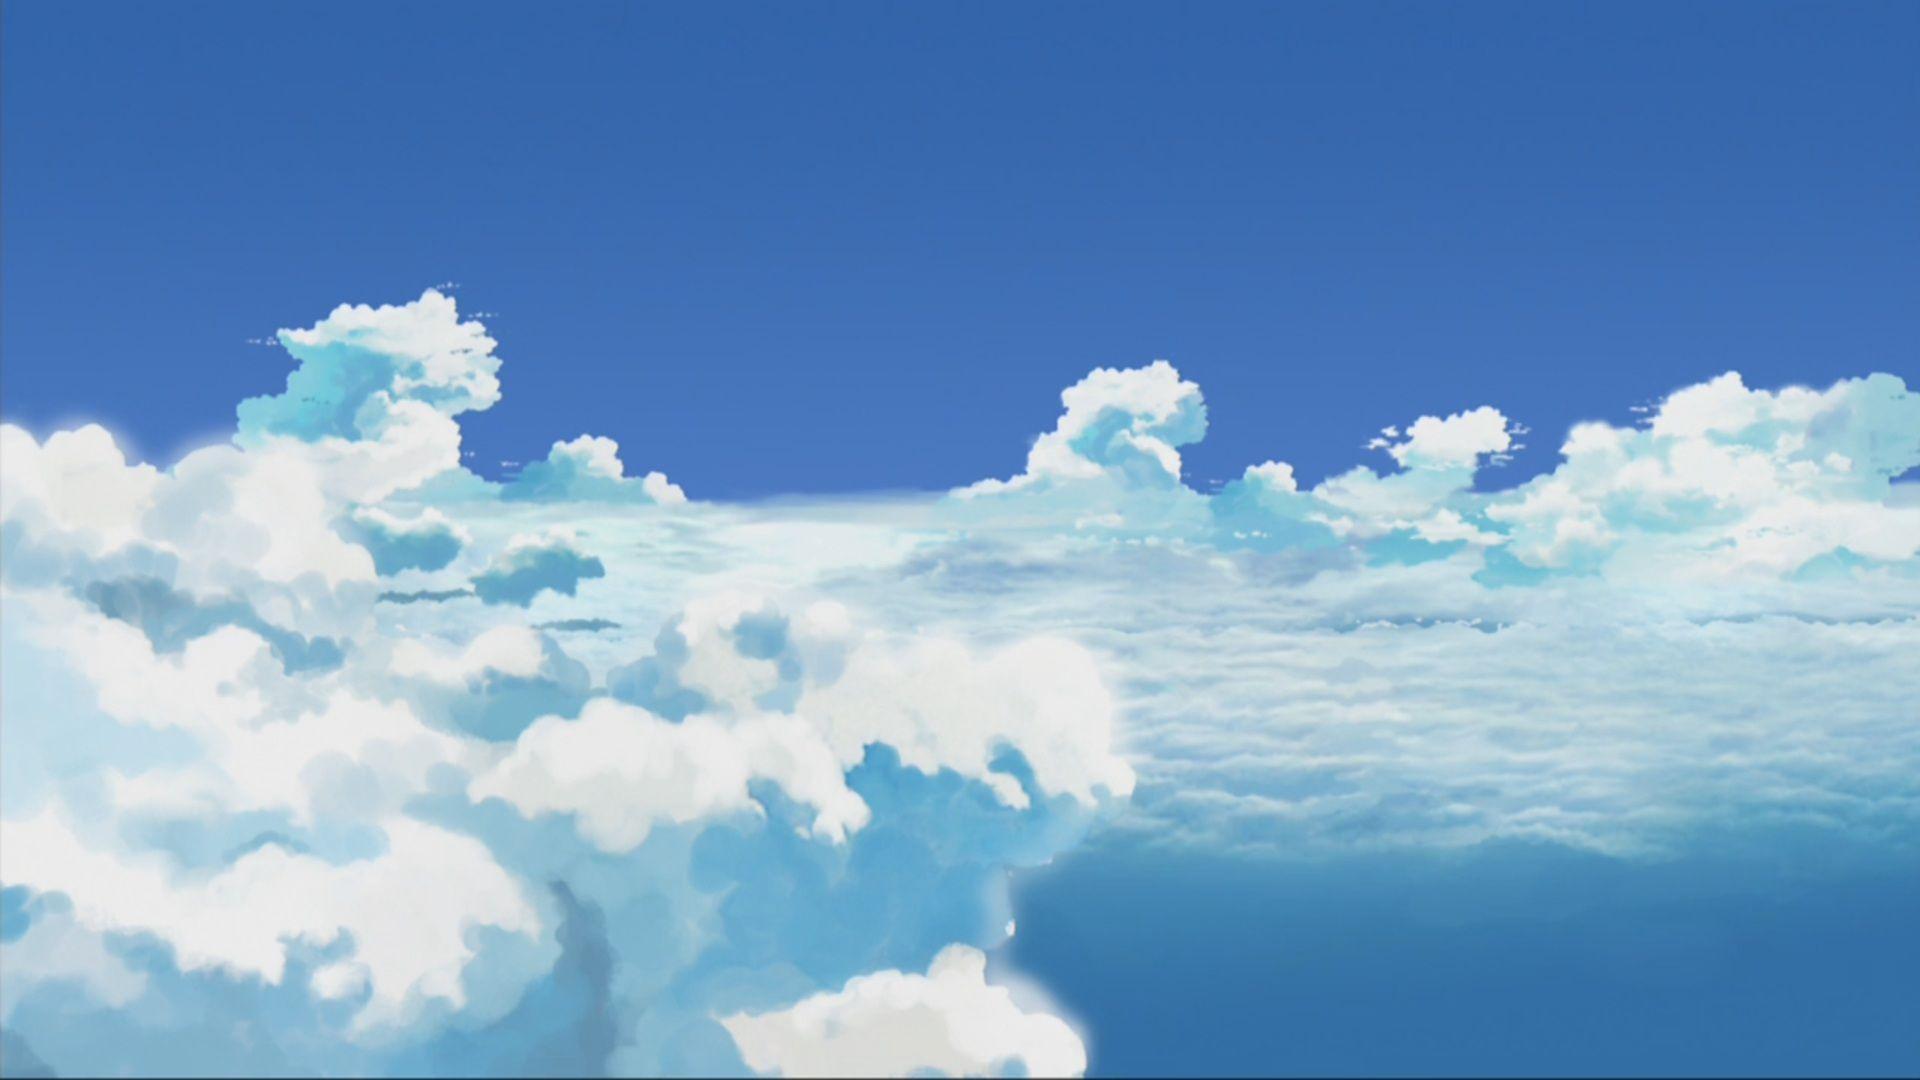 Shingeki no Kyojin, Anime screenshot, anime, sky, clouds, anime sky, dark |  1920x1080 Wallpaper - wallhaven.cc